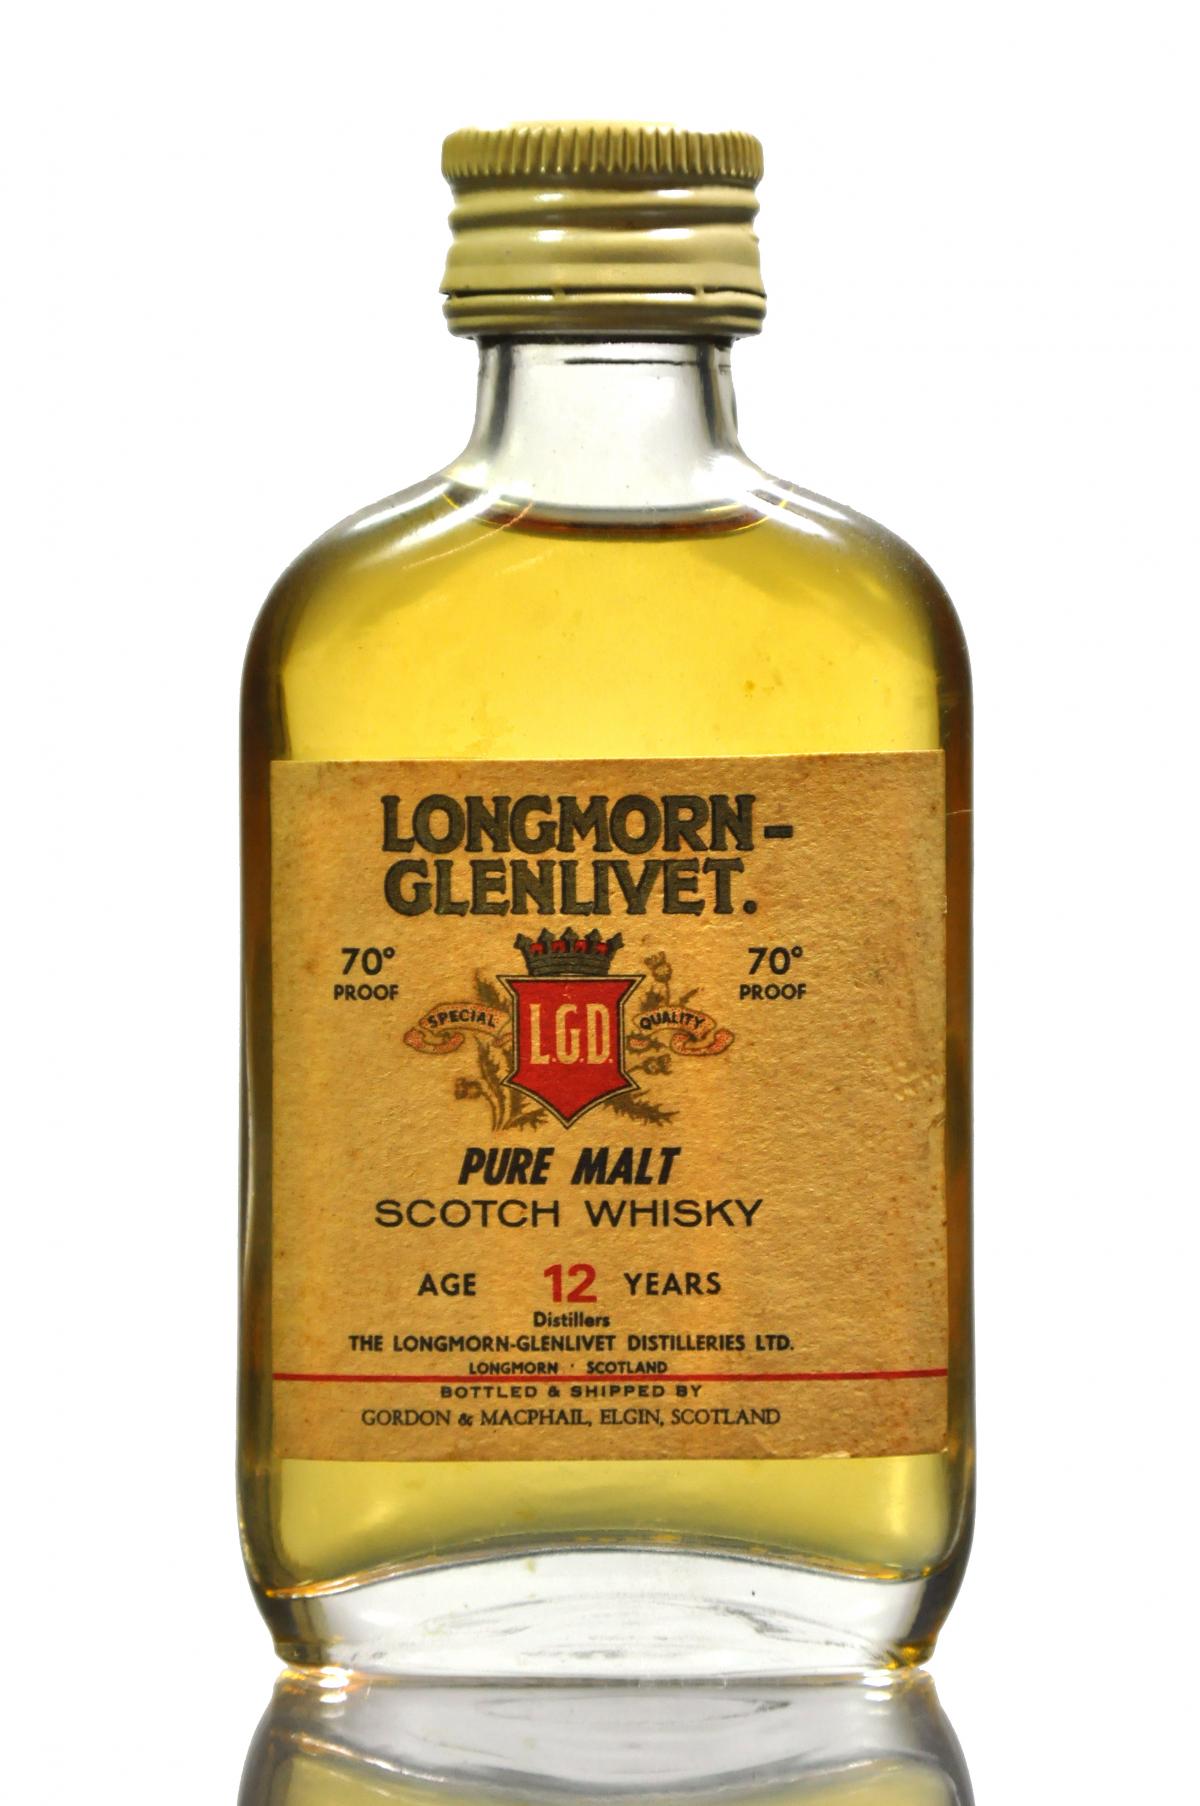 Longmorn-Glenlivet 12 Year Old - Gordon & MacPhail Miniature